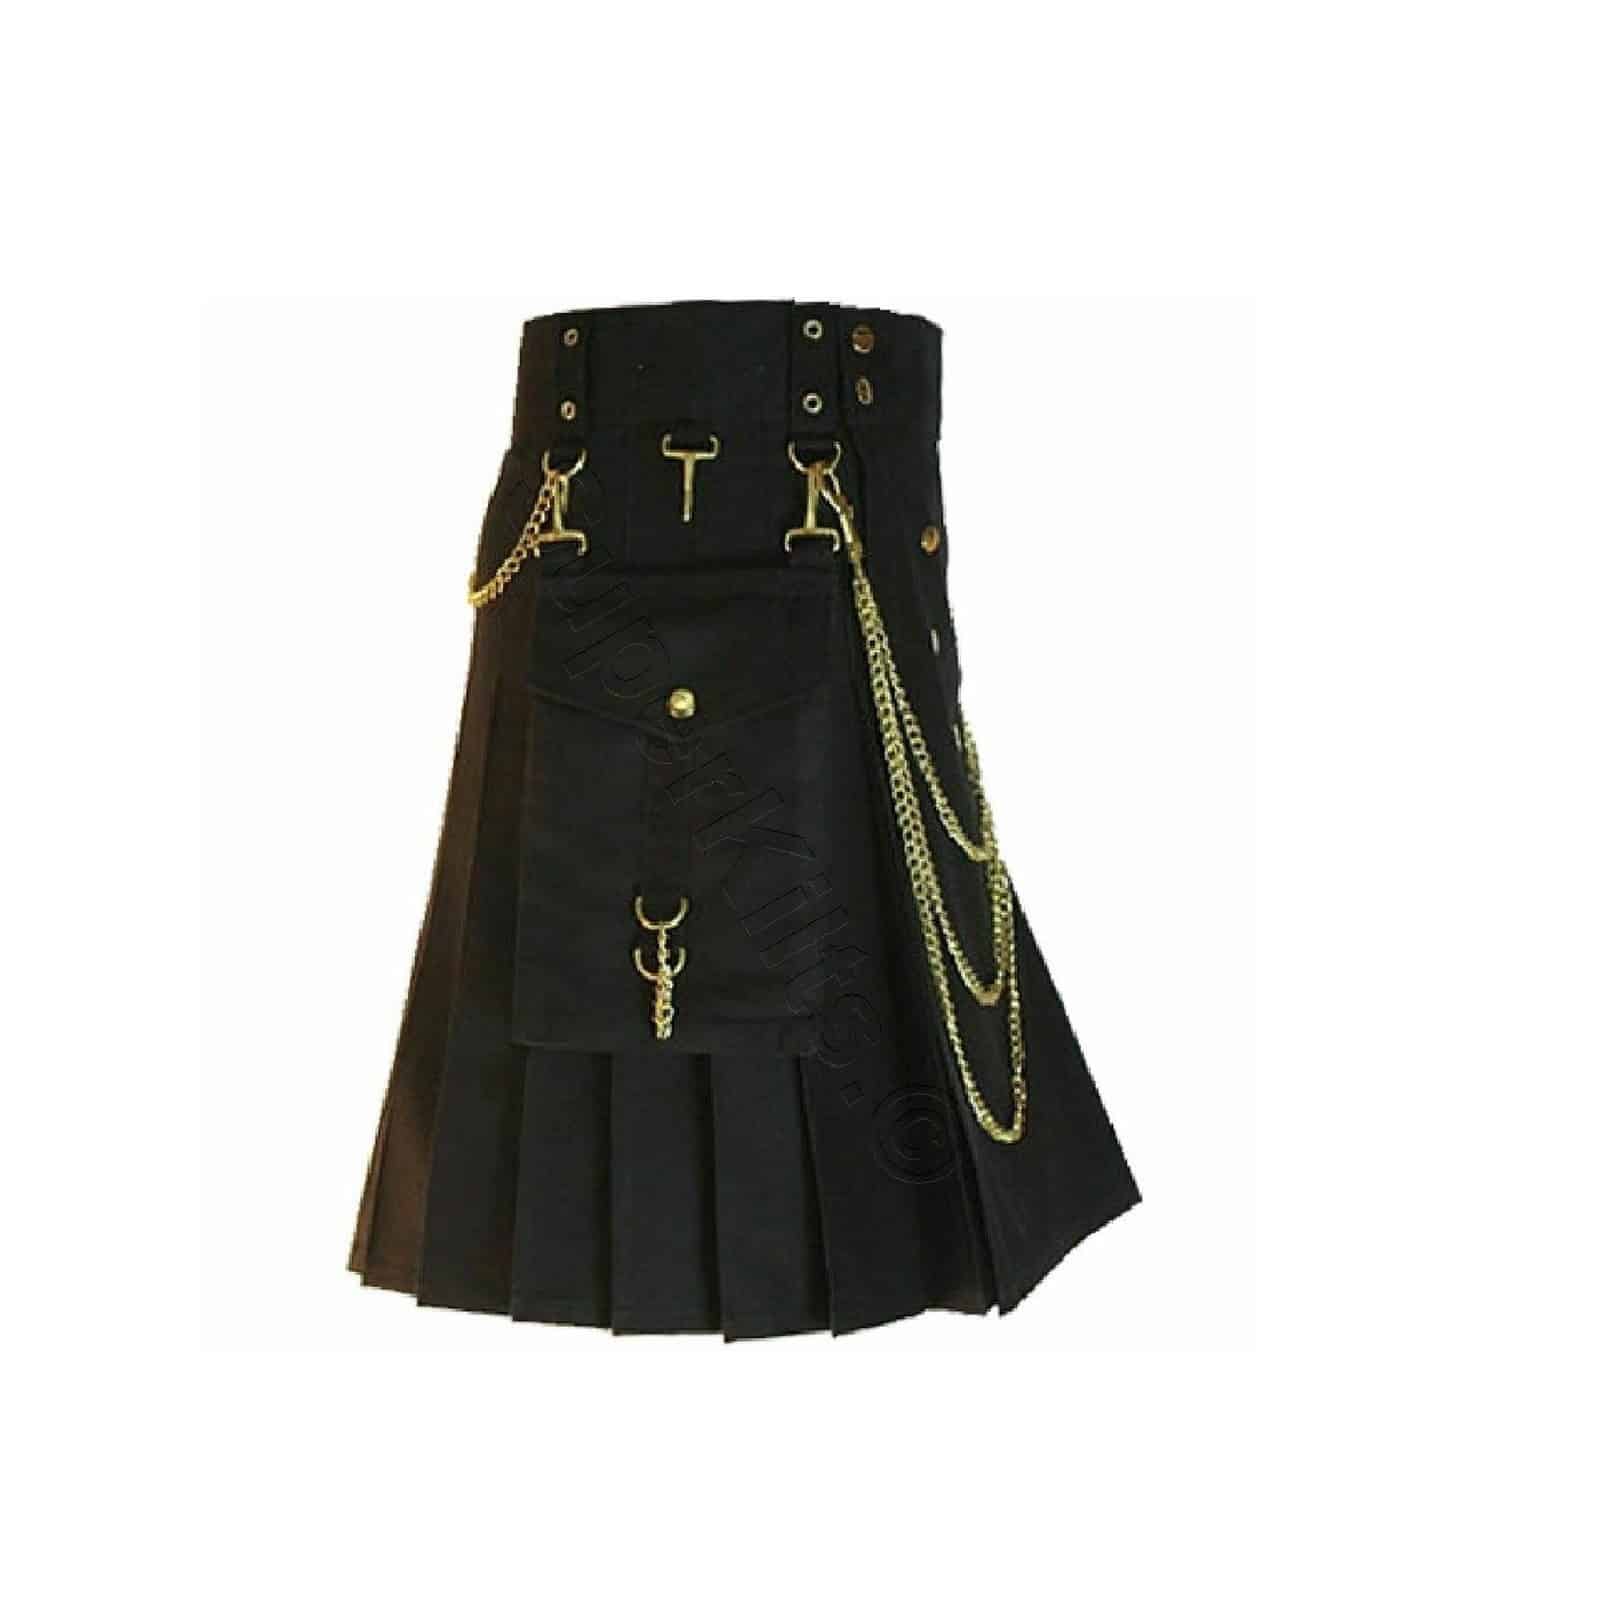 Modern Kilt With Golden Chains | Fashion Kilt For Sale Nov 2020 ...